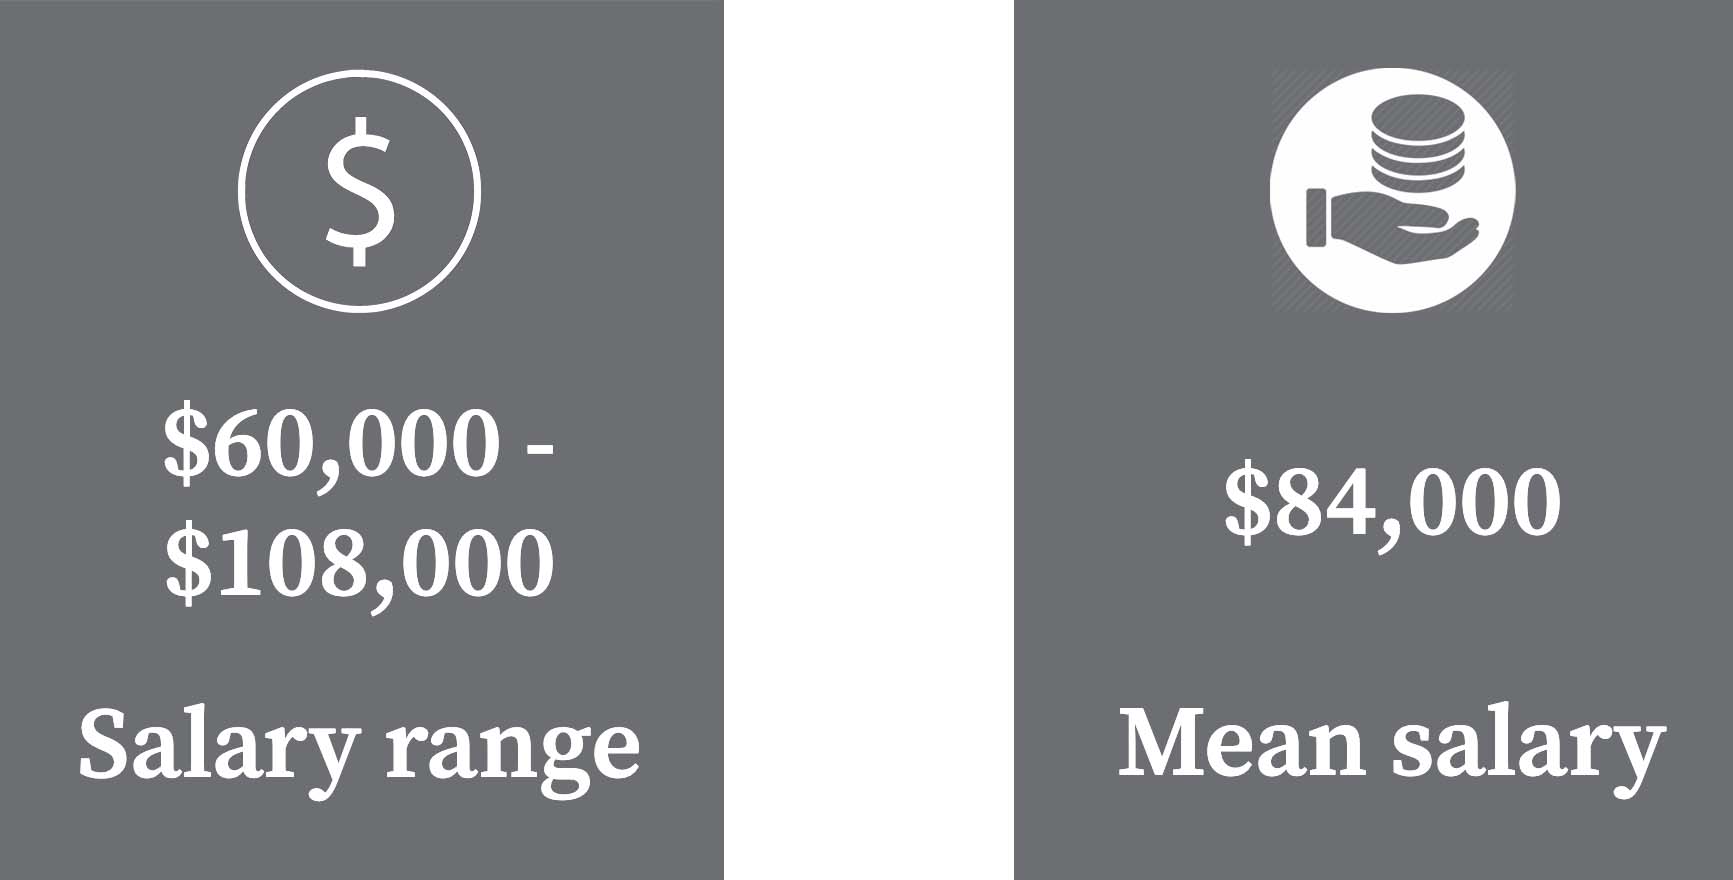 graphic: salary range - $60,000 to $108,000, mean salary - $84,000